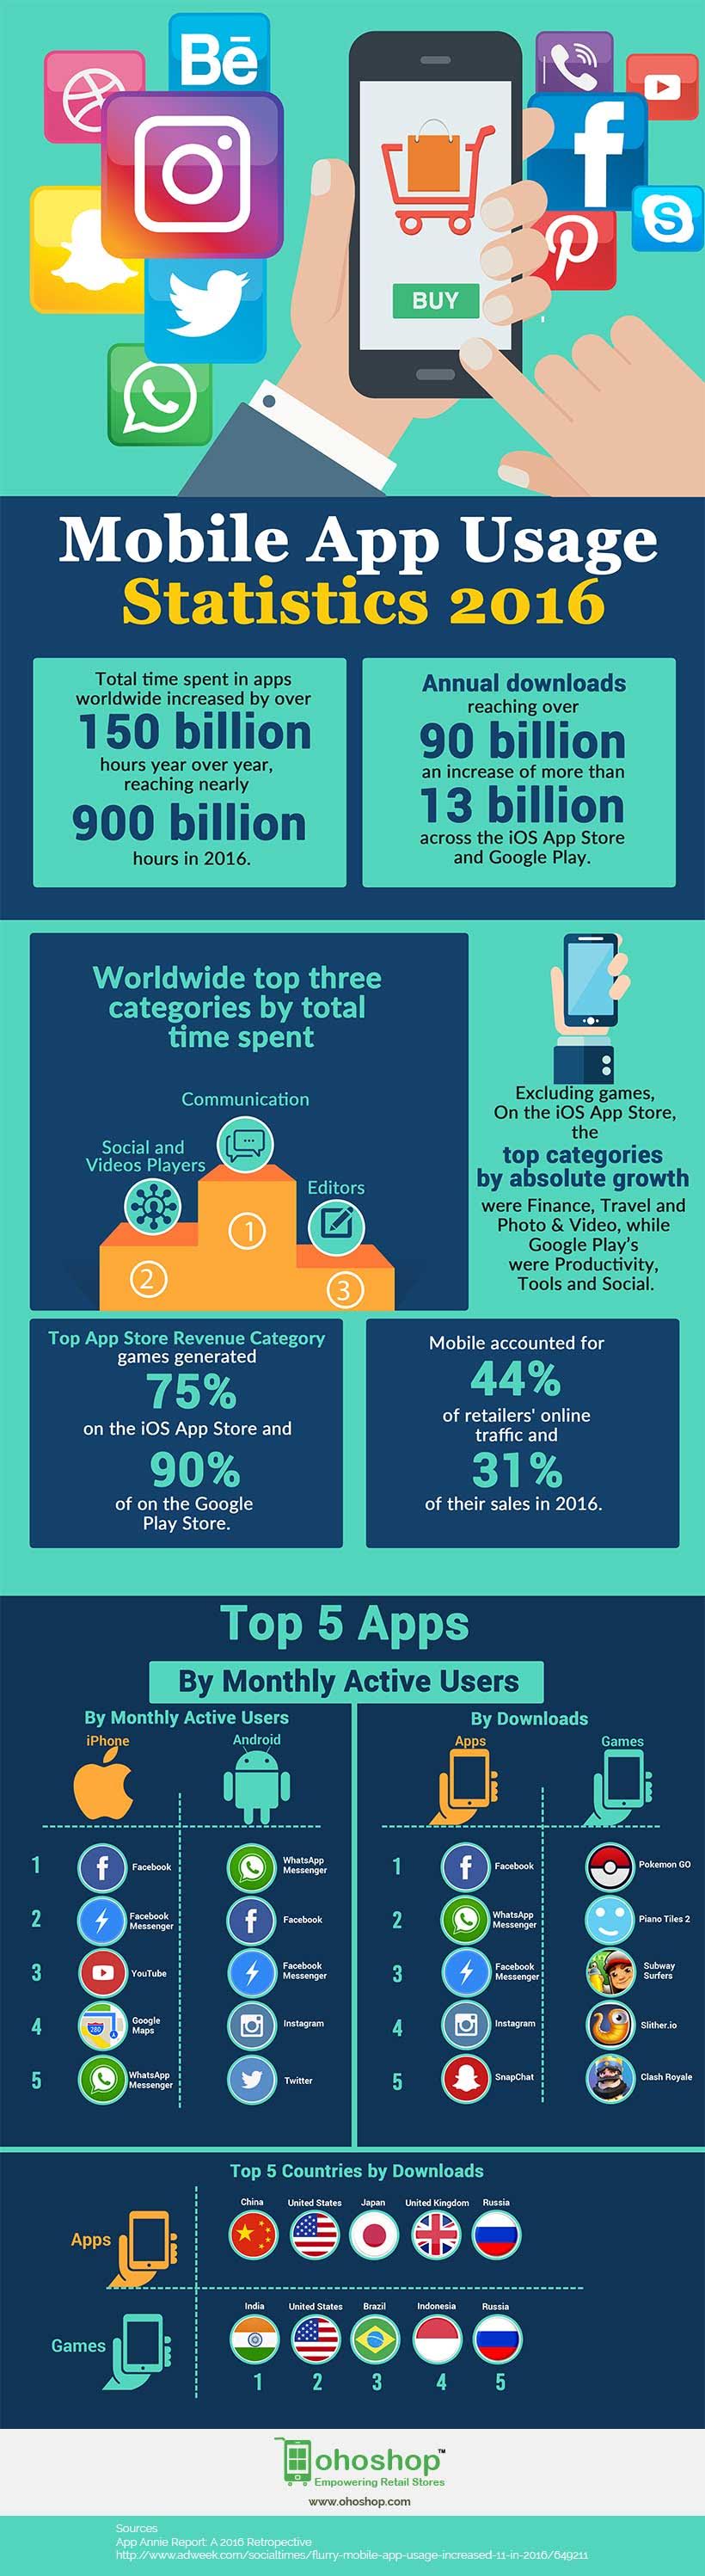 Mobile App Usage Statistics 2016 #infographic